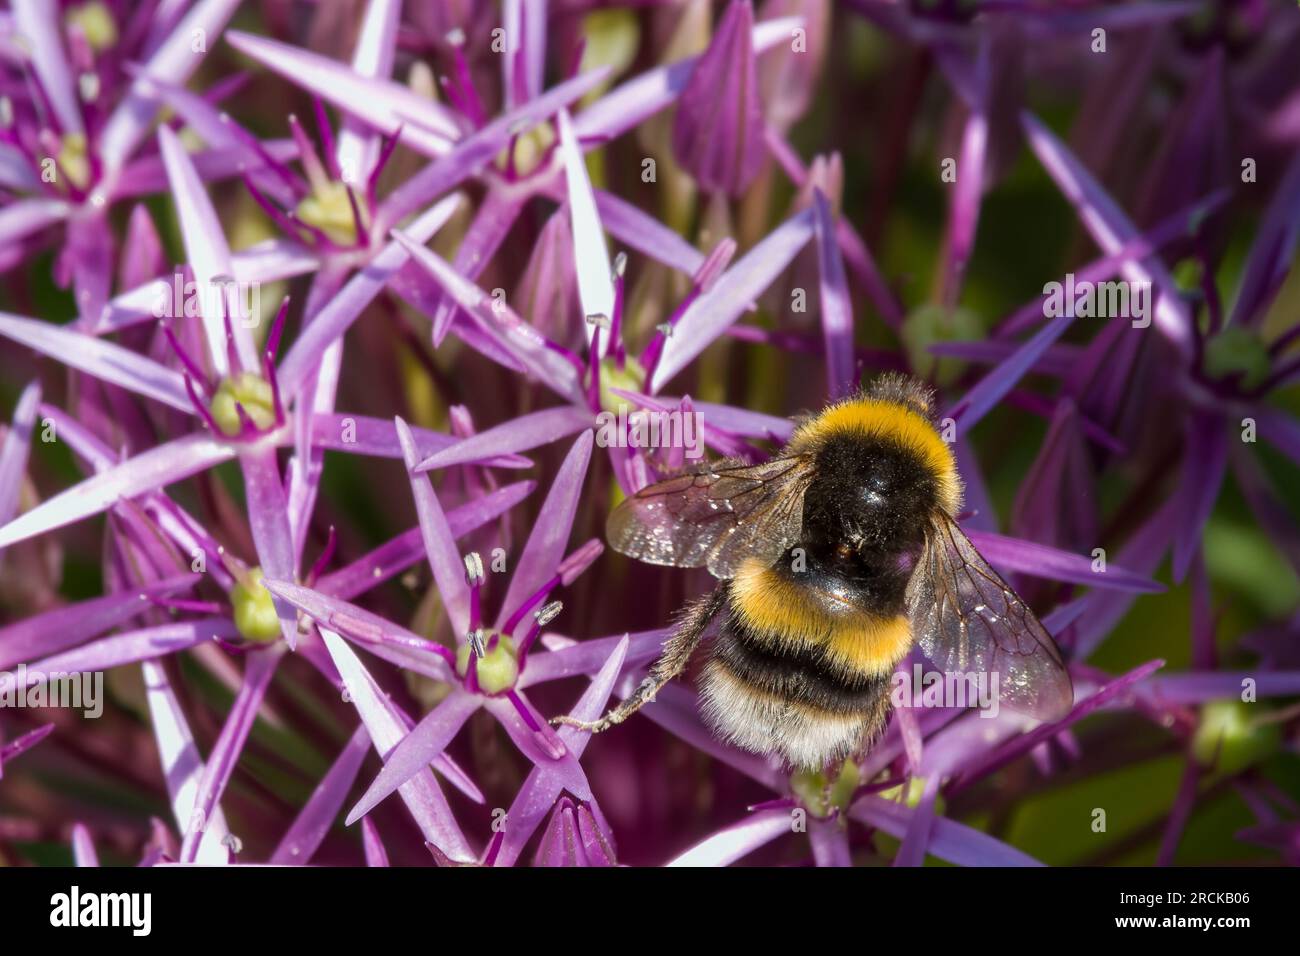 buff tailed bumble bee collecting pollen from beautiful purple flowers of black garlic allium nigrum Stock Photo